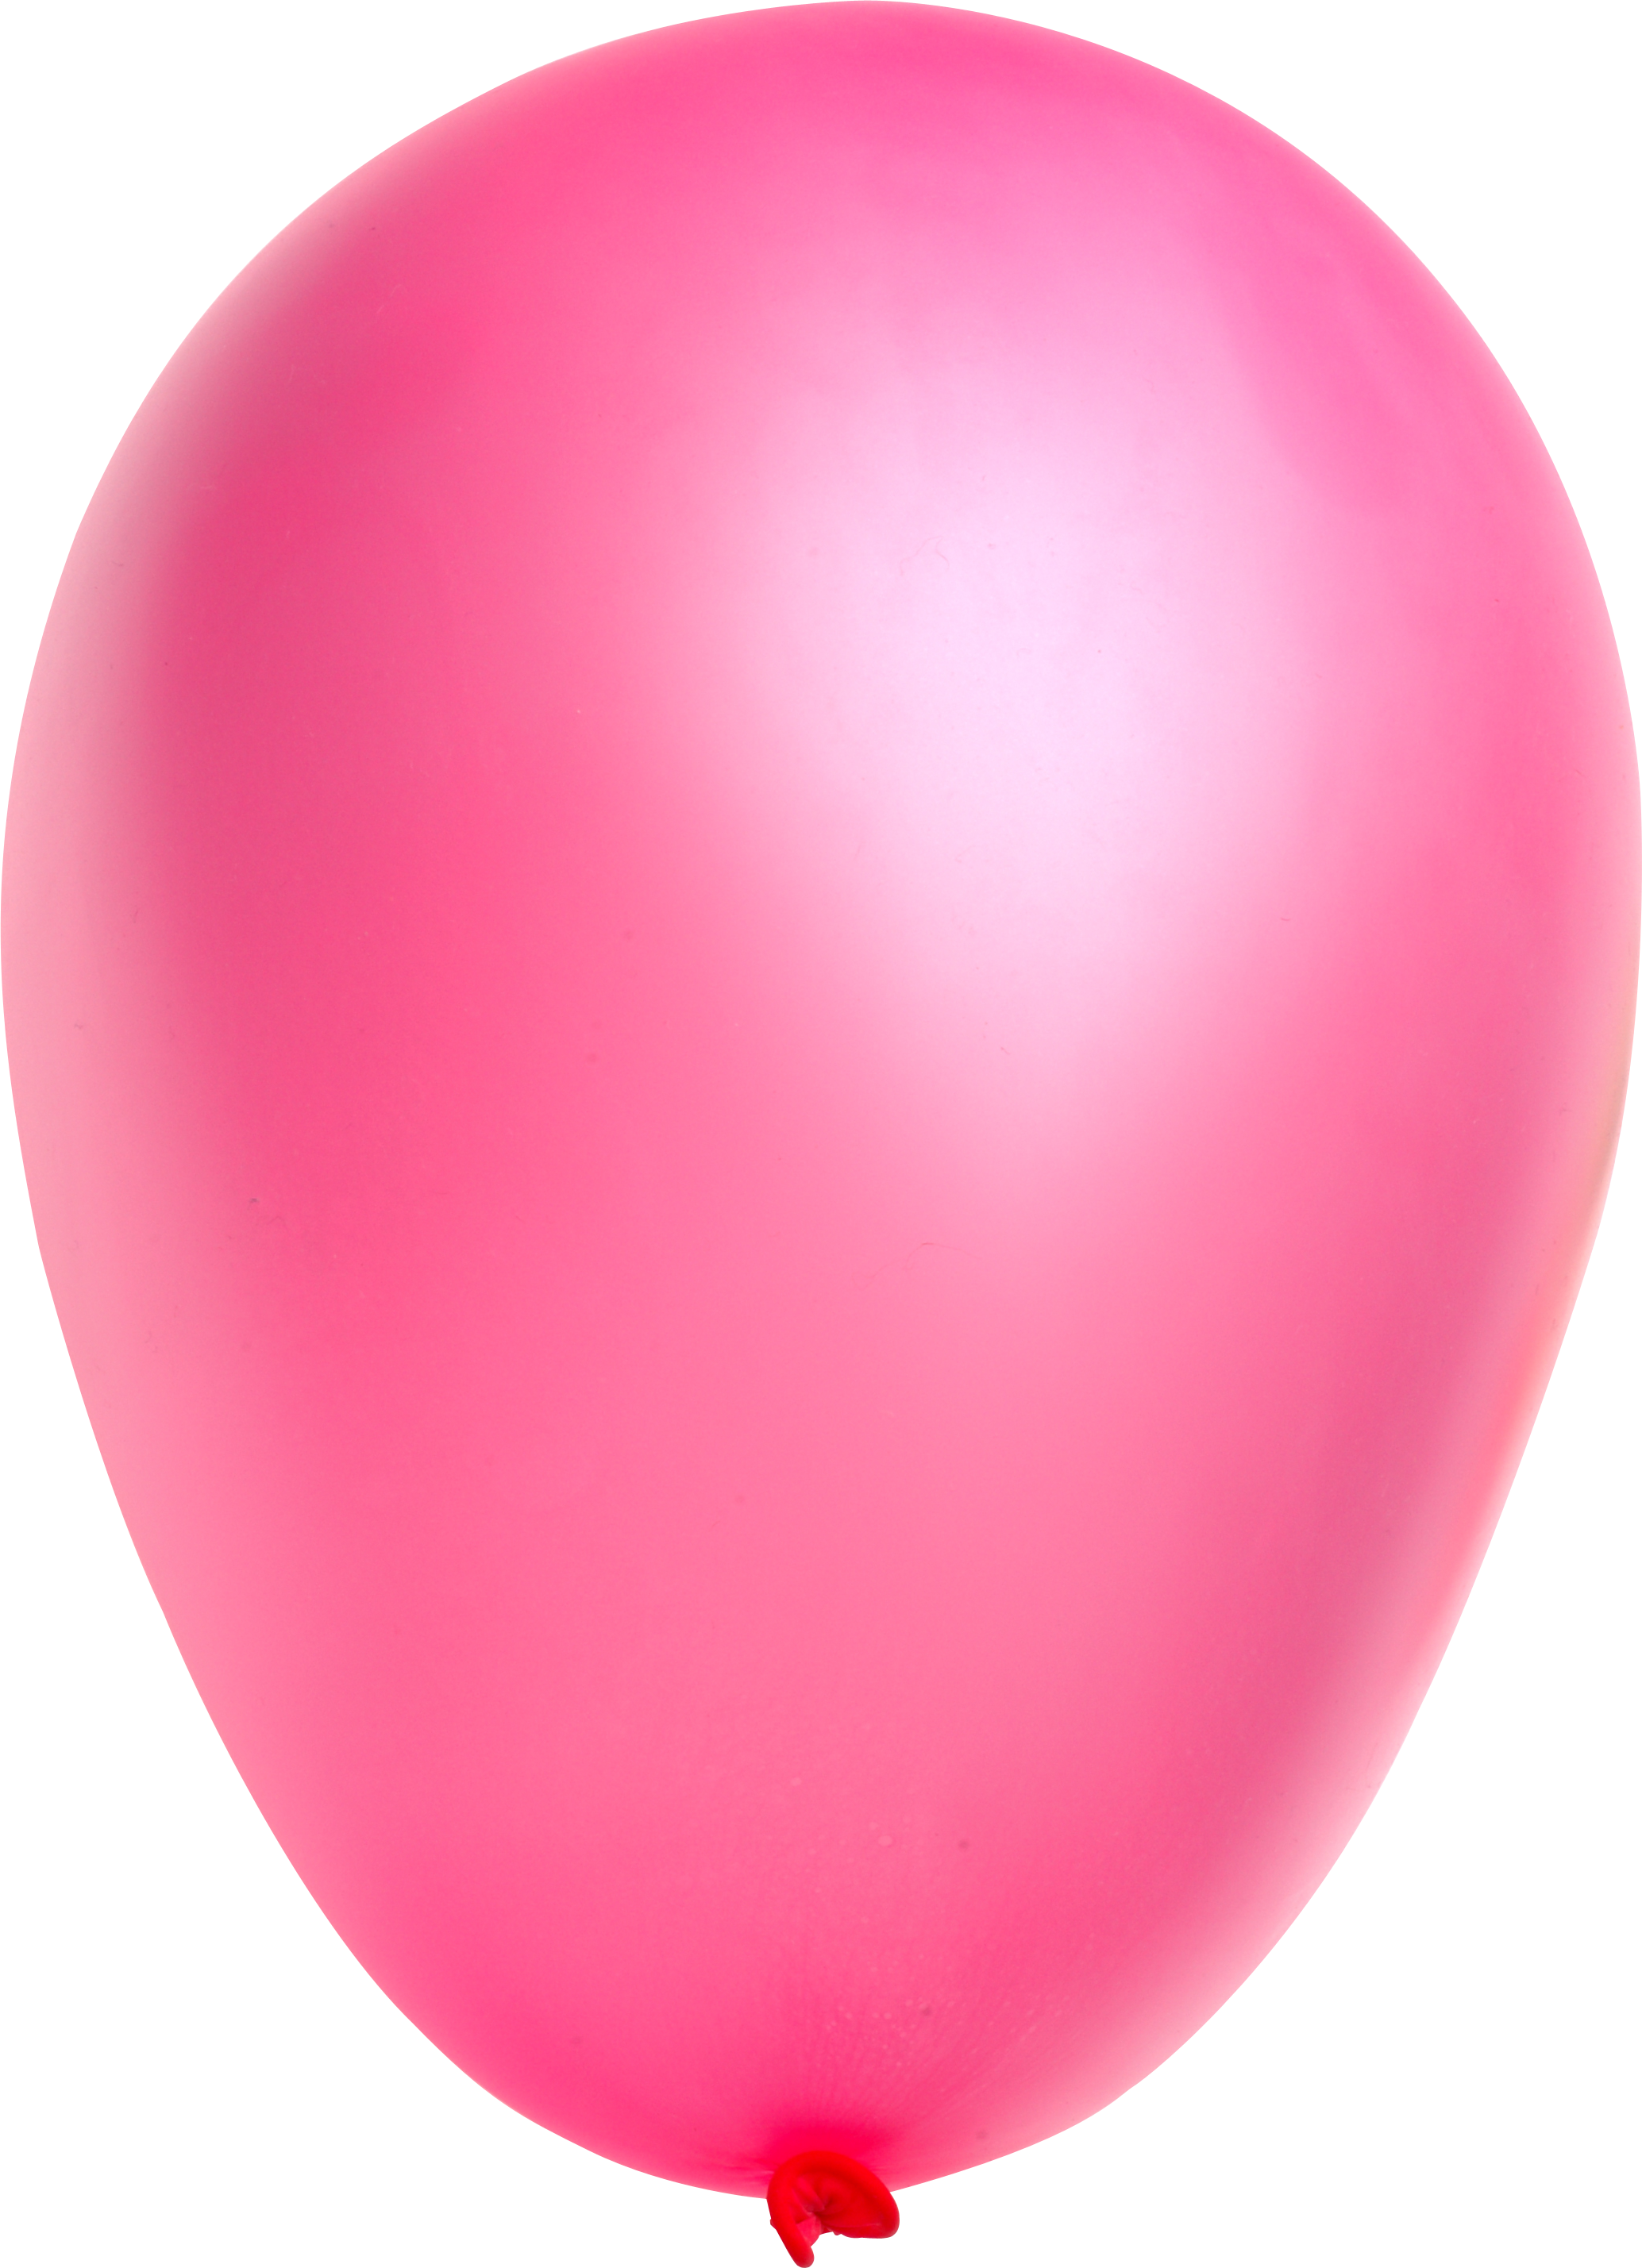 clipart balloon four